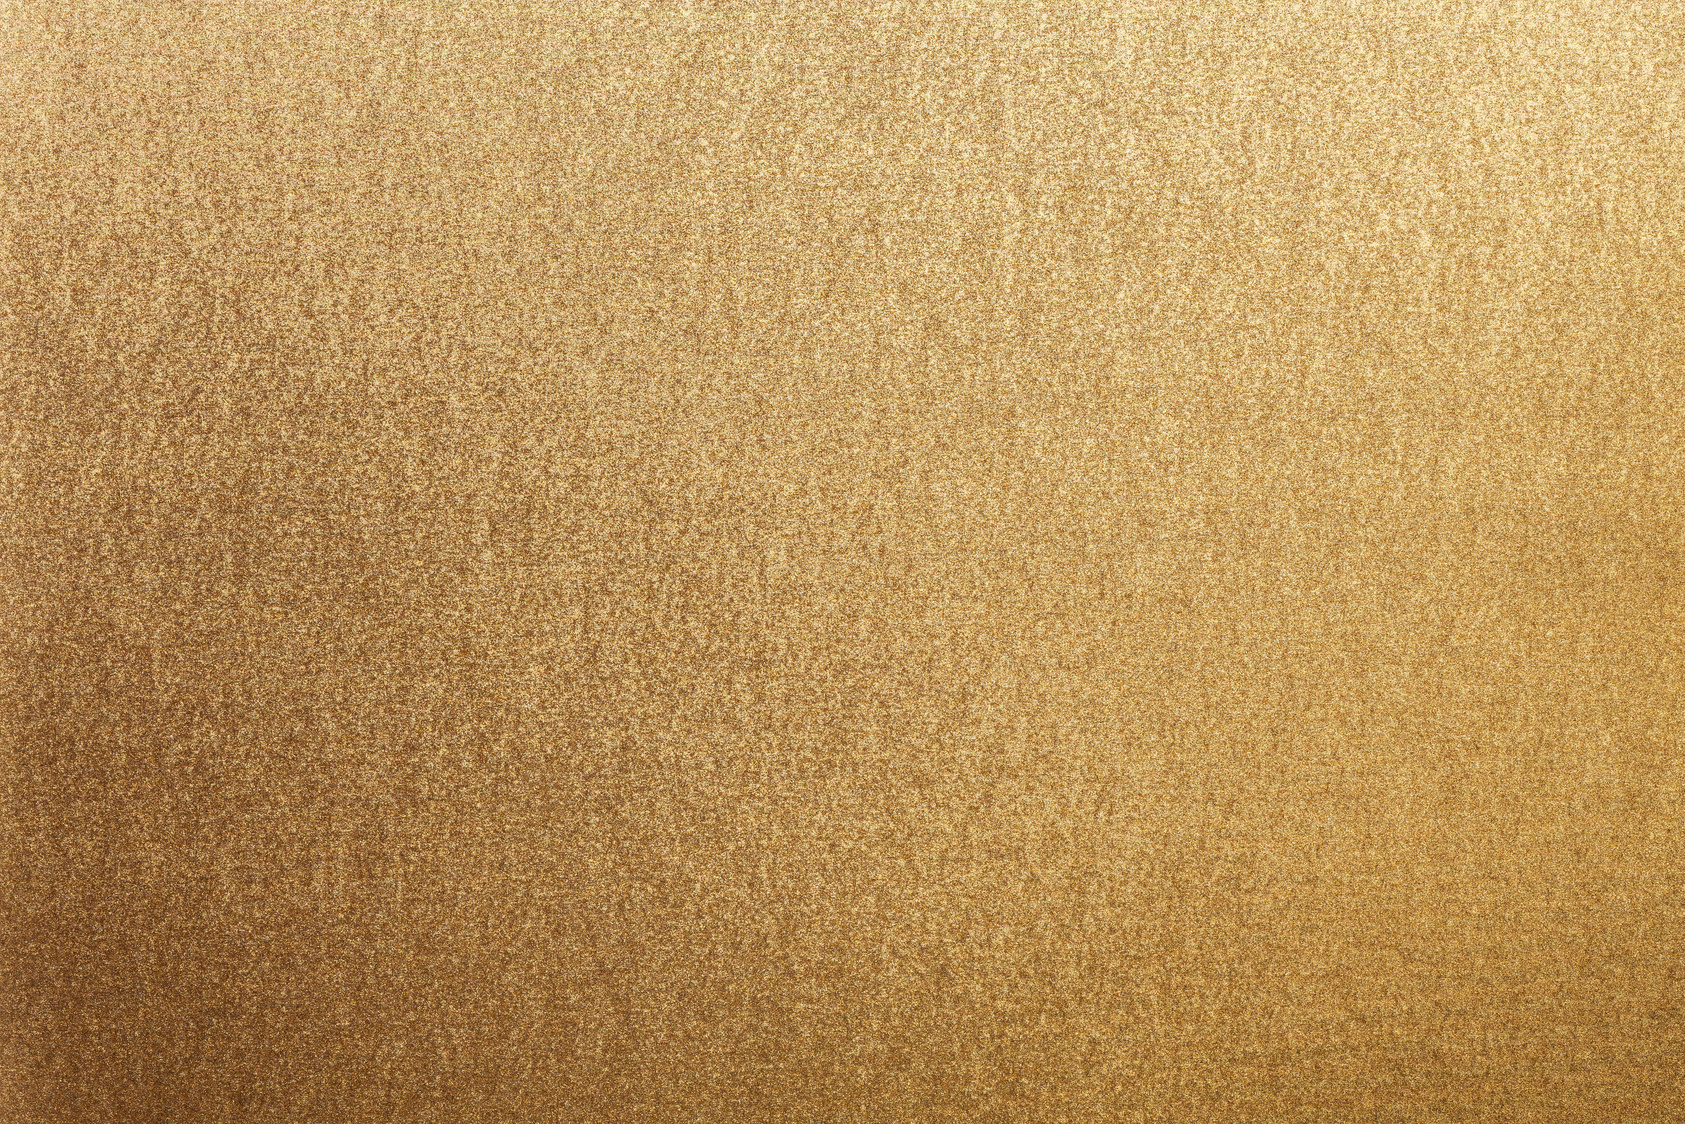 Glamorous golden paper texture